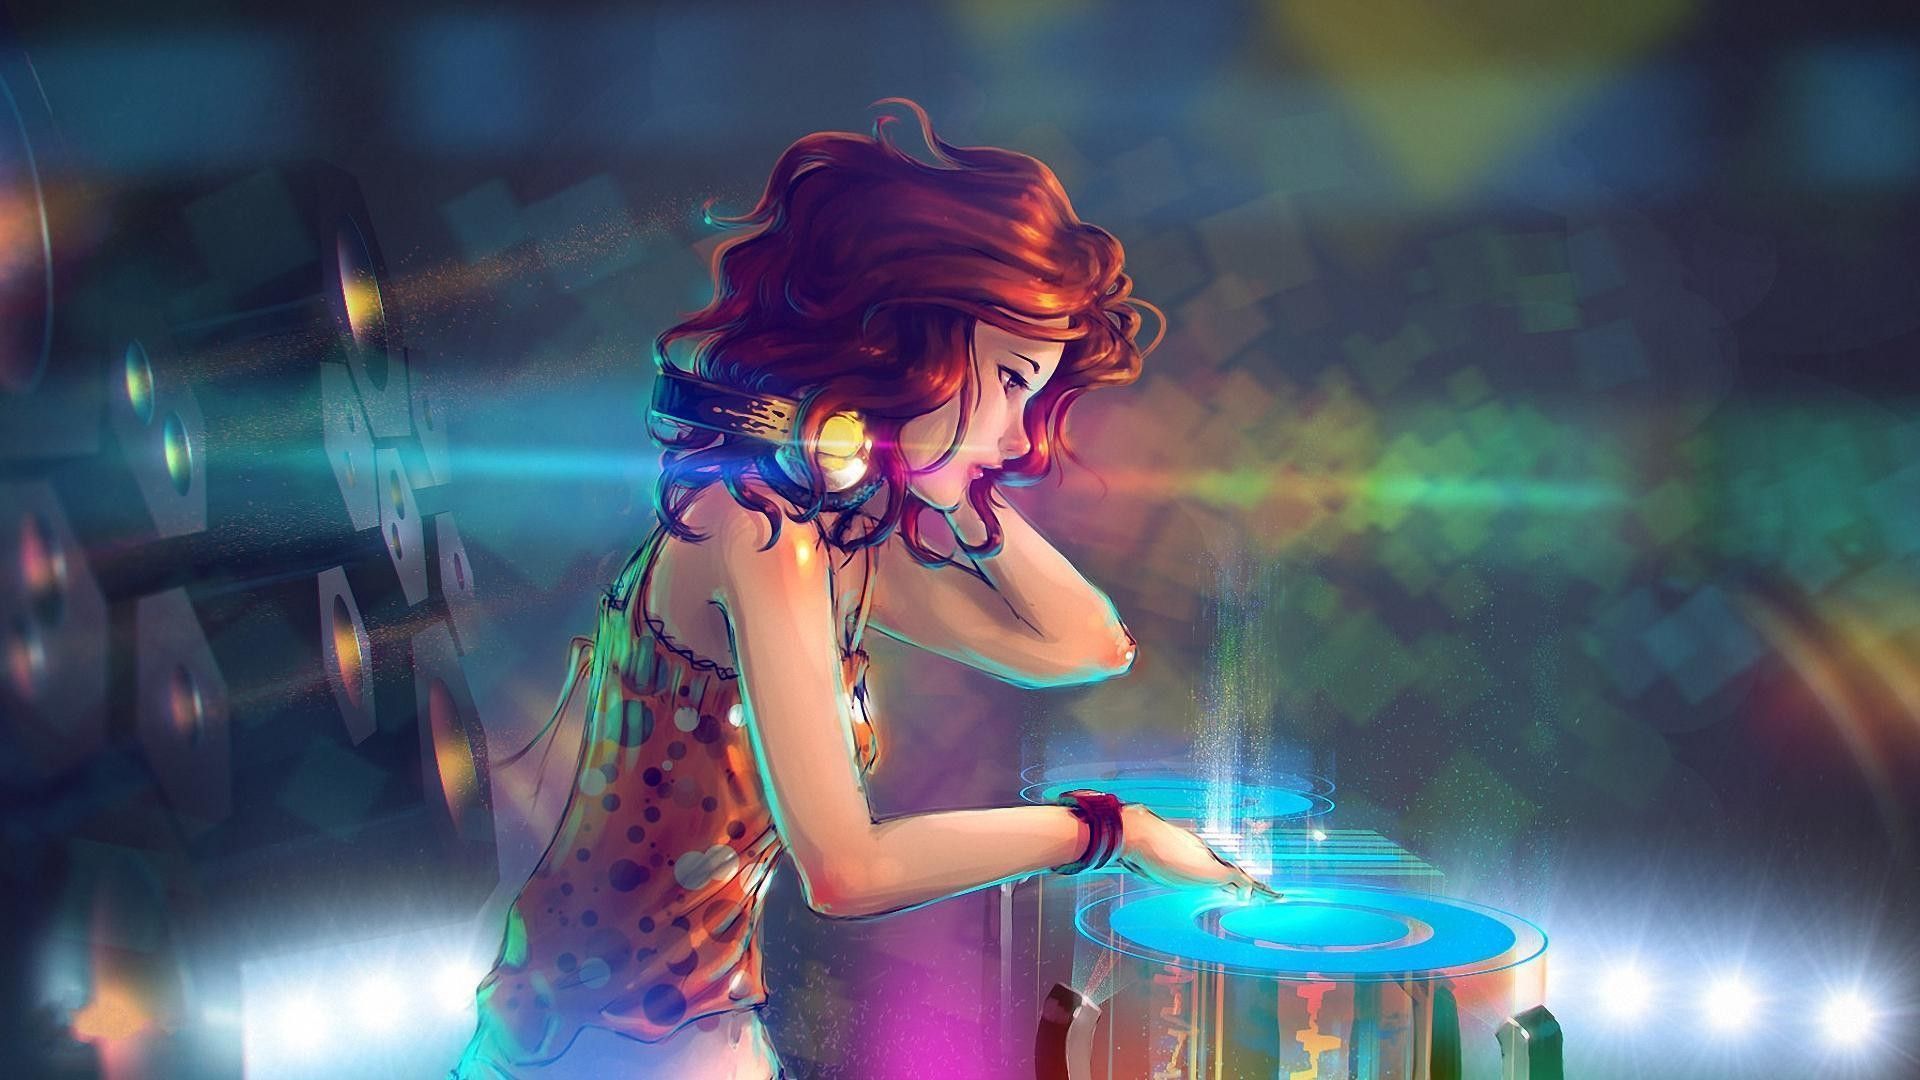 Anime DJ Girl, HD Anime, 4k Wallpaper, Image, Background